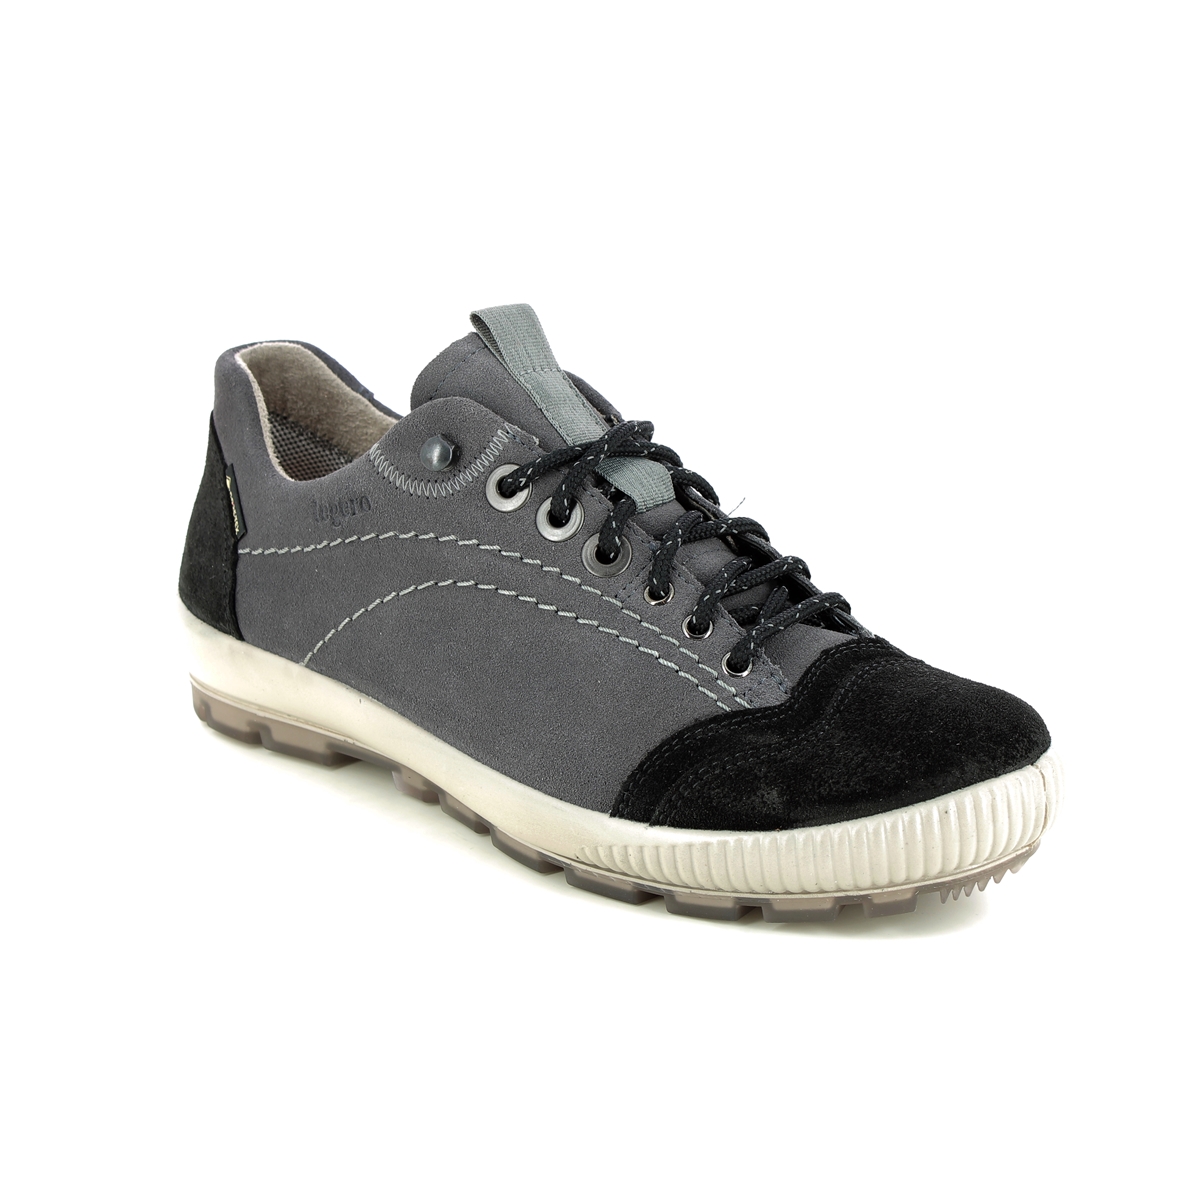 Legero Tanaro Trek Gtx Grey Womens Walking Shoes 2000122-2400 In Size 6.5 In Plain Grey